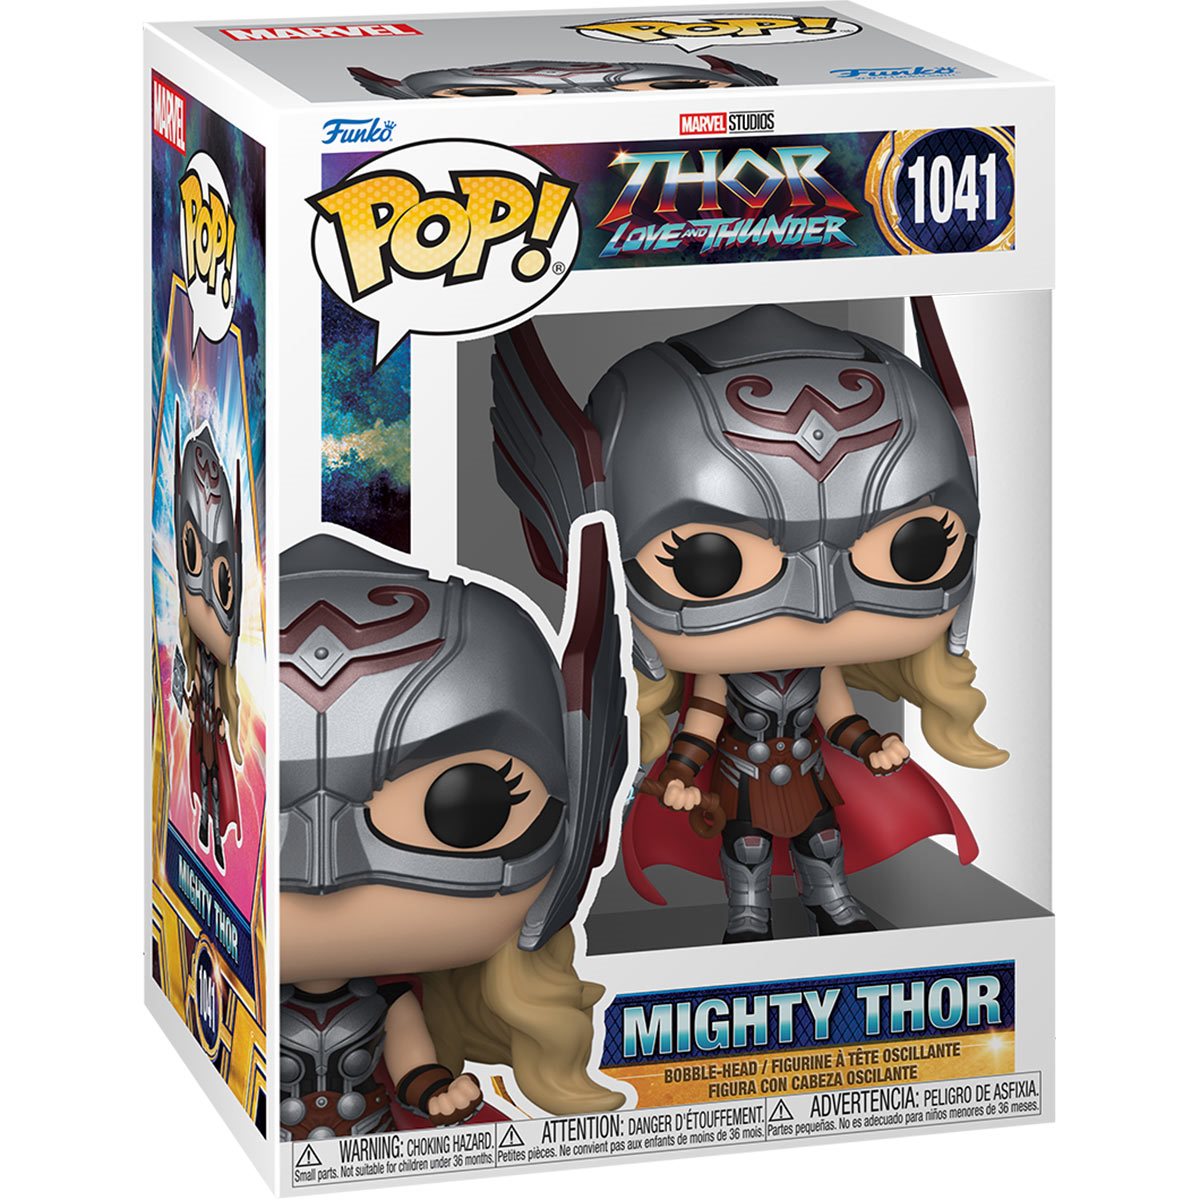 Thor: Love and Thunder Mighty Thor Funko Pop! Vinyl Figure #1041-1